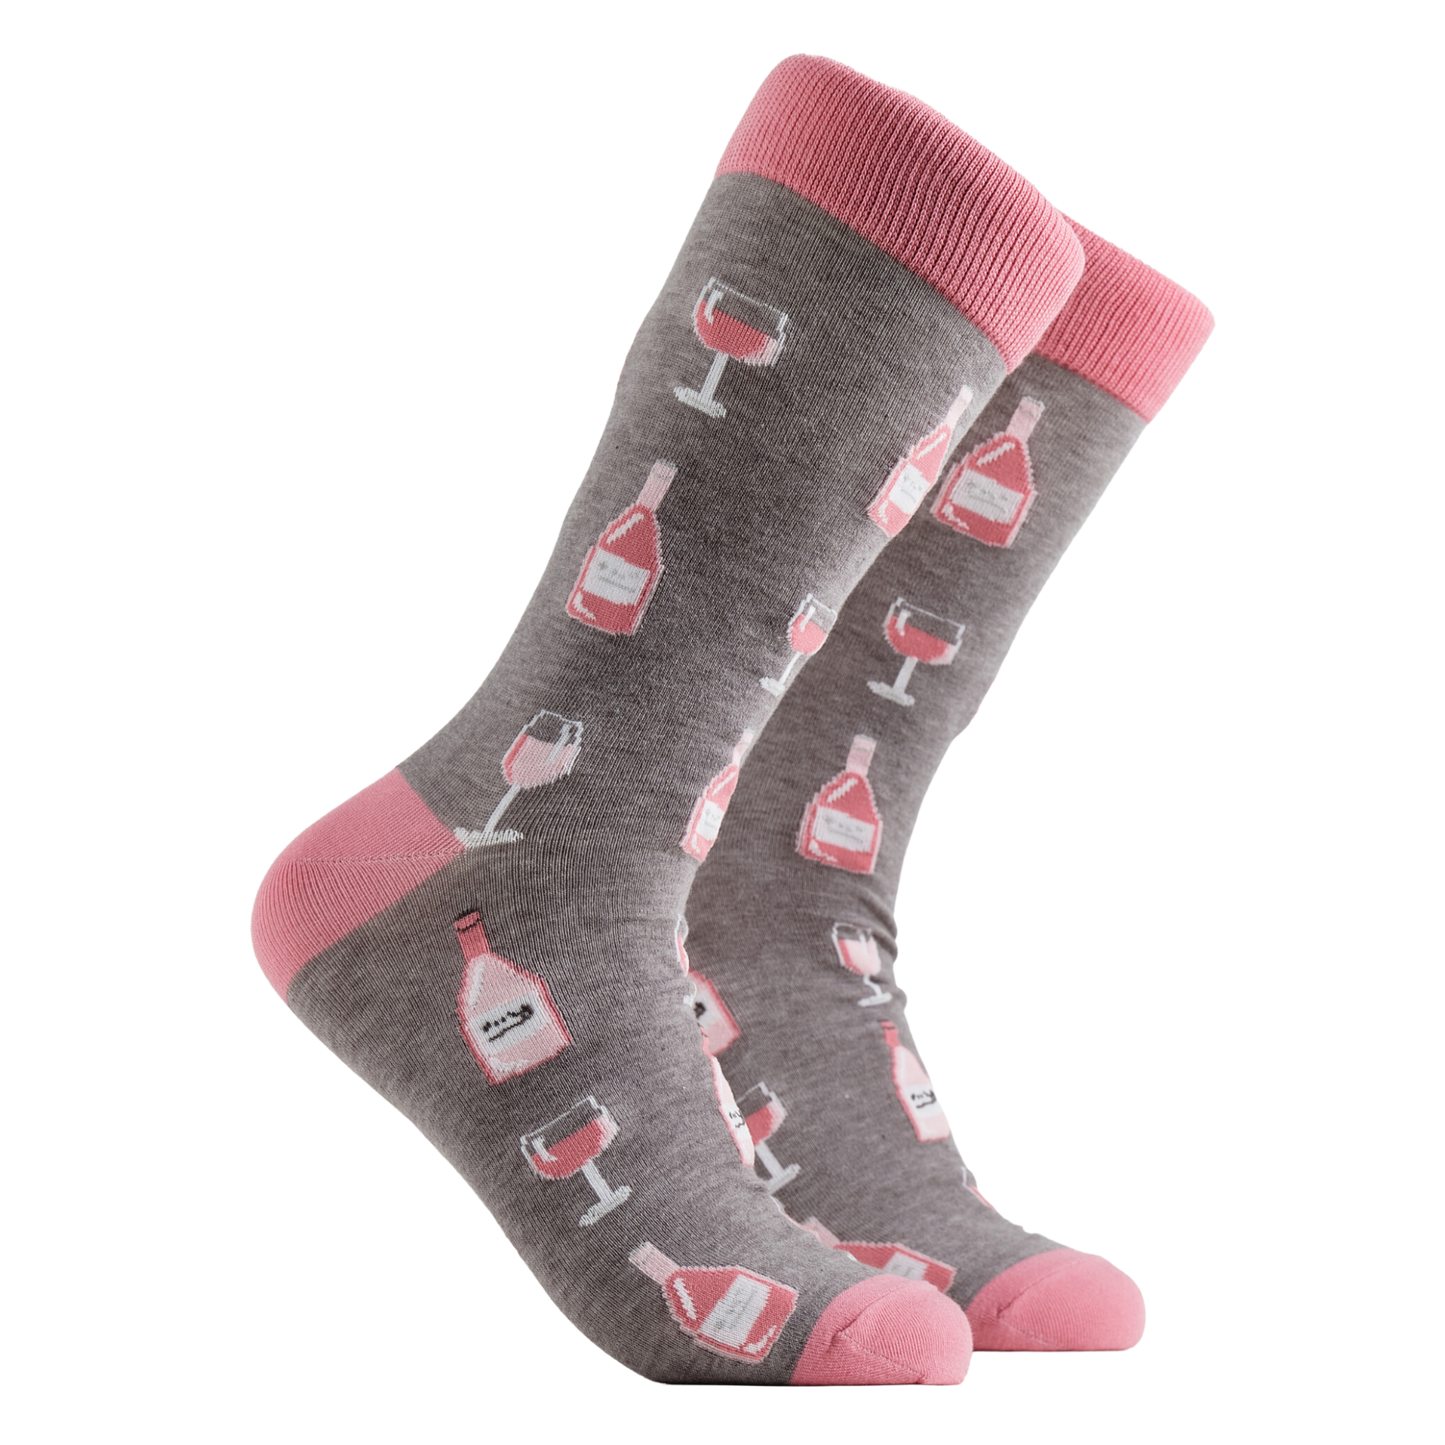 Wine Socks - Rosé O'clock. A pair of socks depicting Rose wine bottles and glasses. Grey legs, pink cuff, heel and toe.